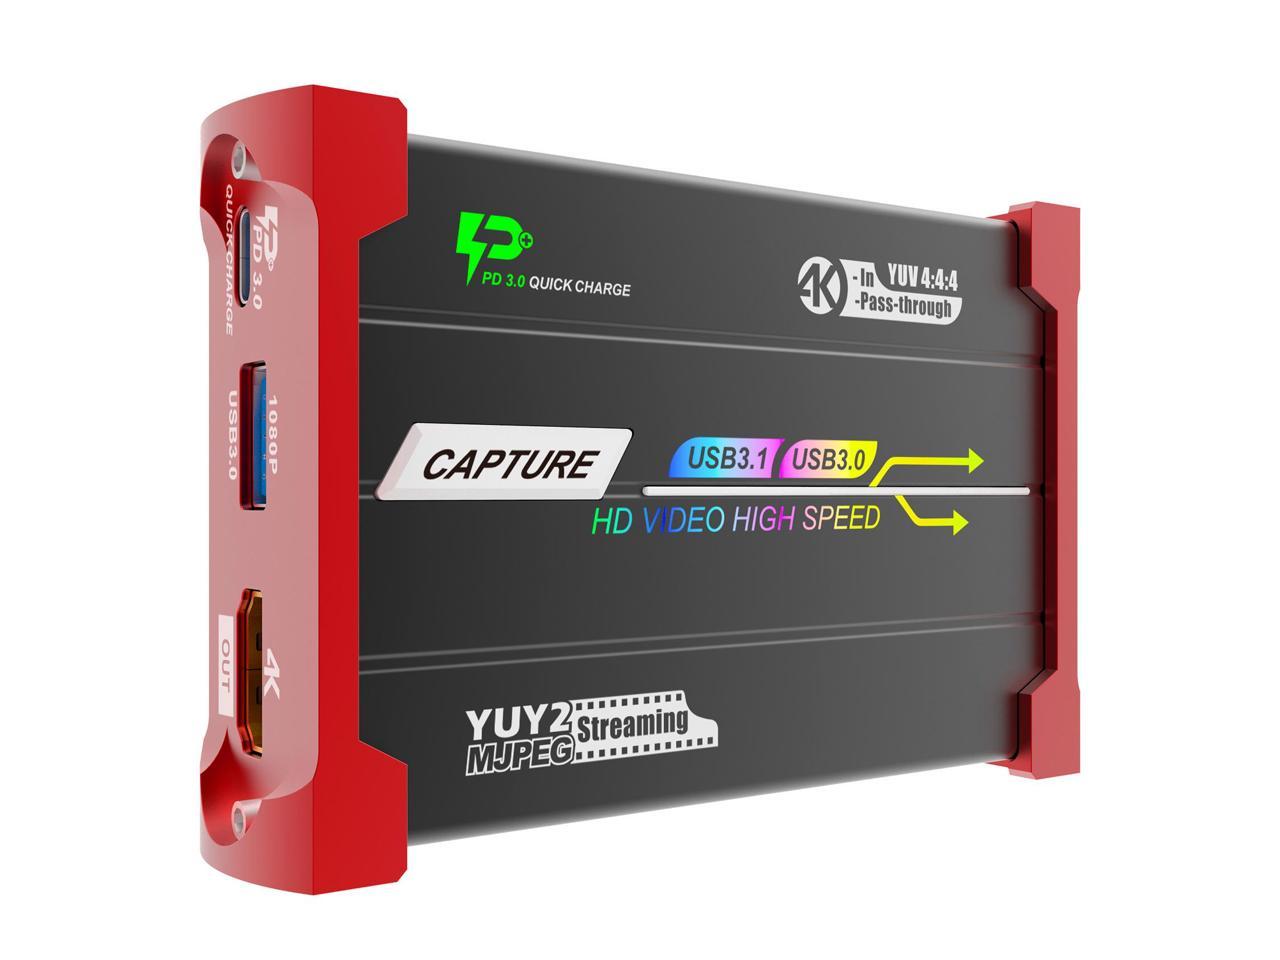 Mirabox 4K Game Capture Card, HSV3219 HDMI/Type-C to USB3.0 Video 